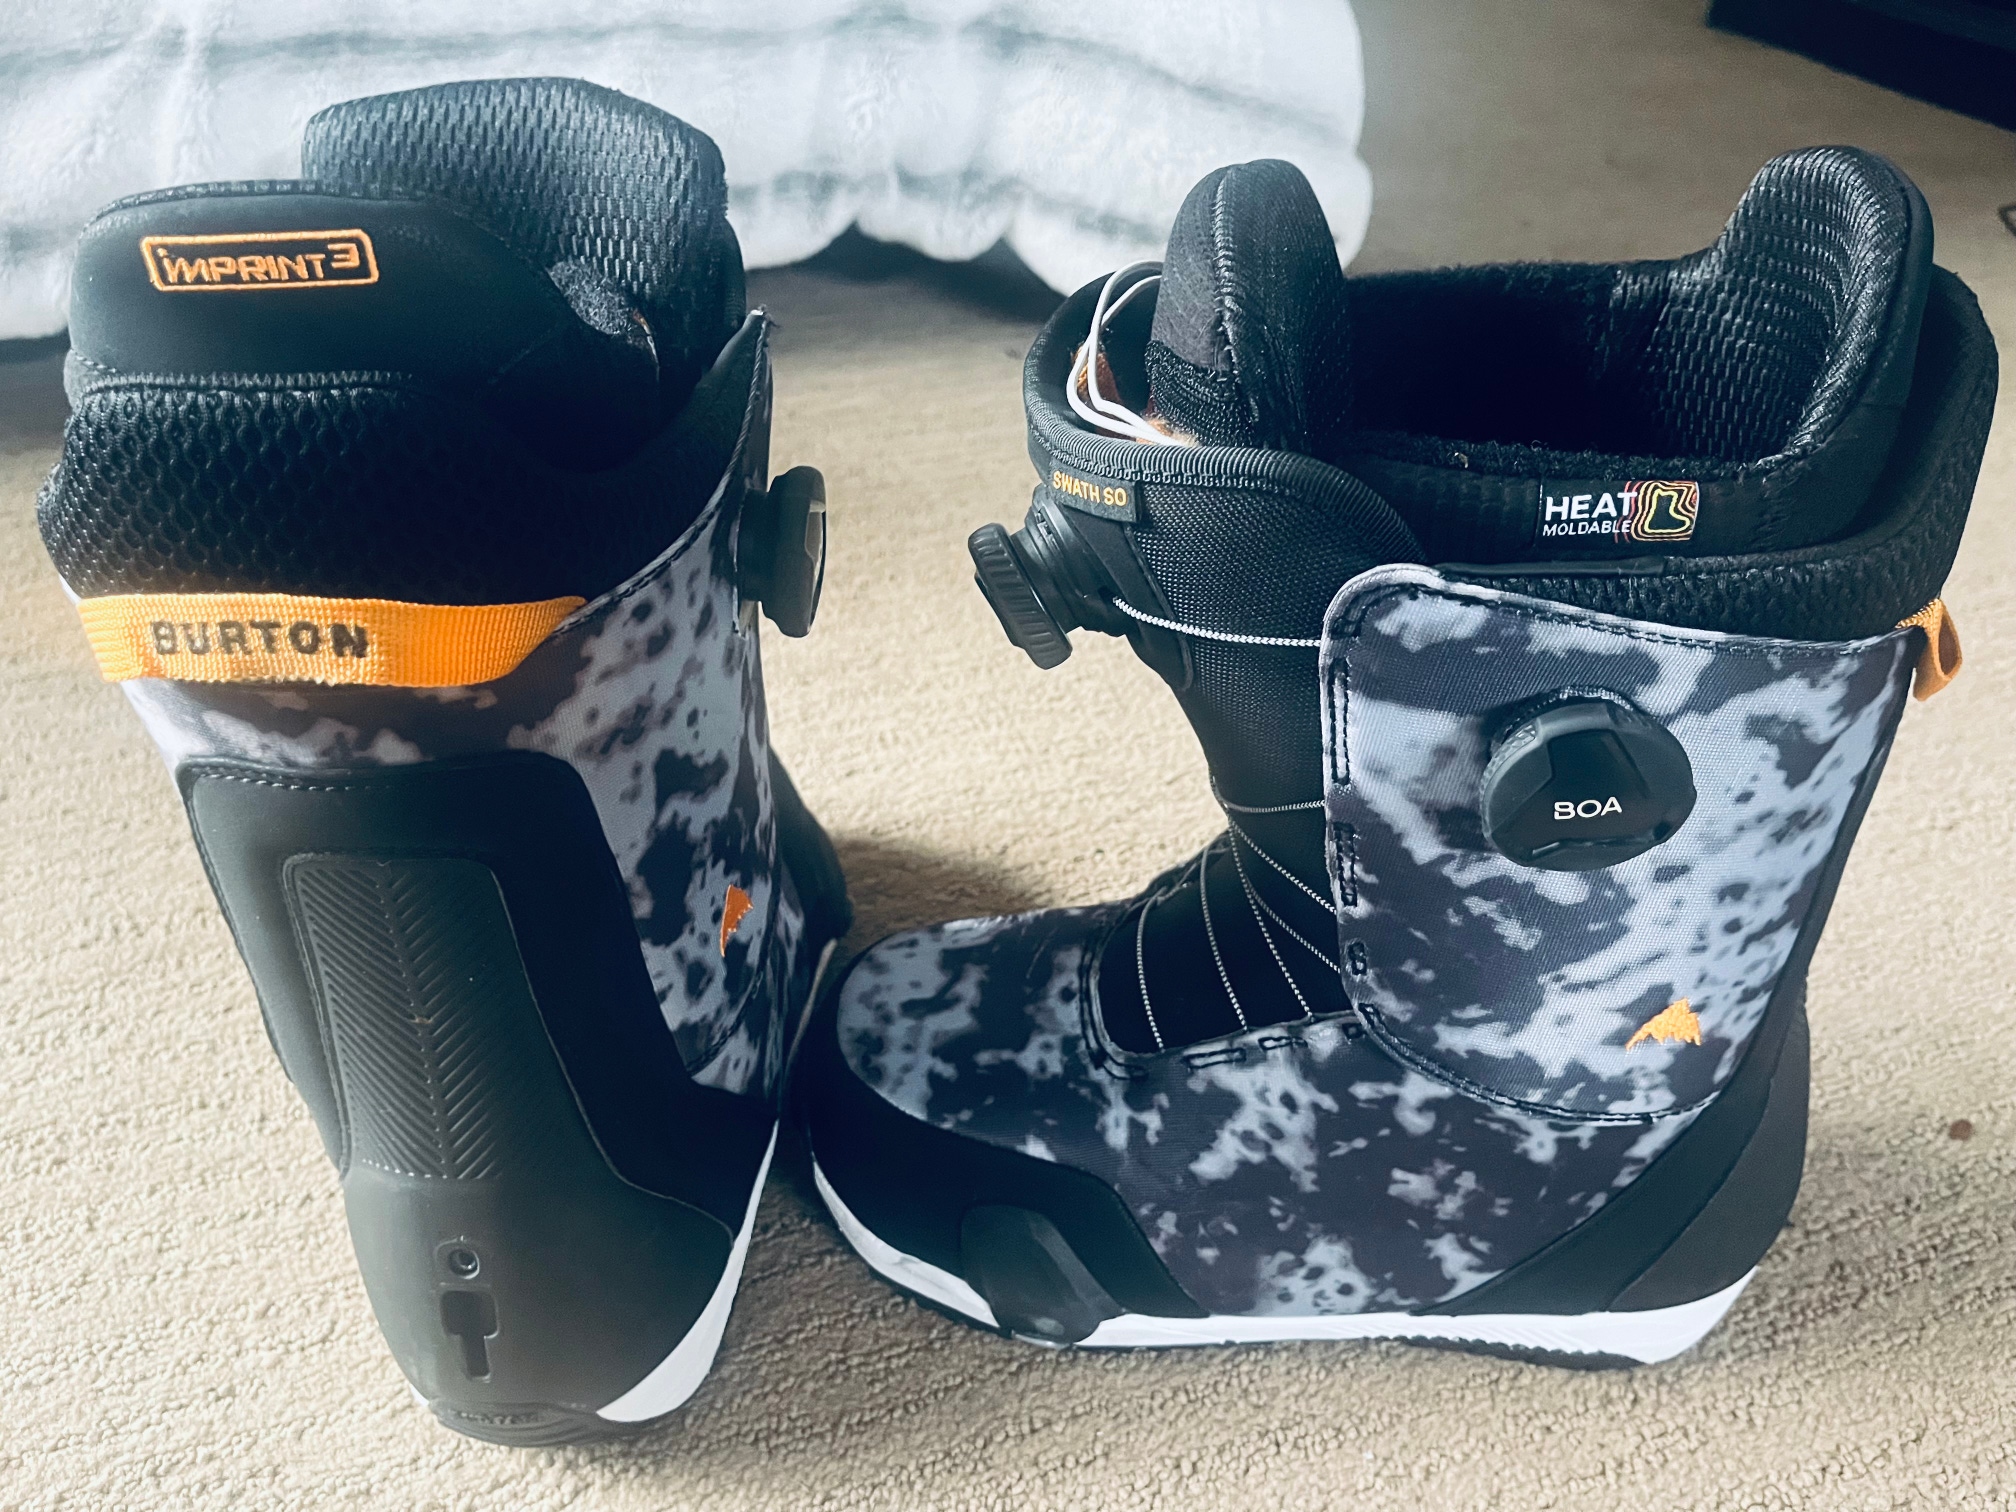 New Men's Size 8.5 (Women's 9.5) Burton Imprint 3 Snowboard Boots Adjustable Flex Freestyle